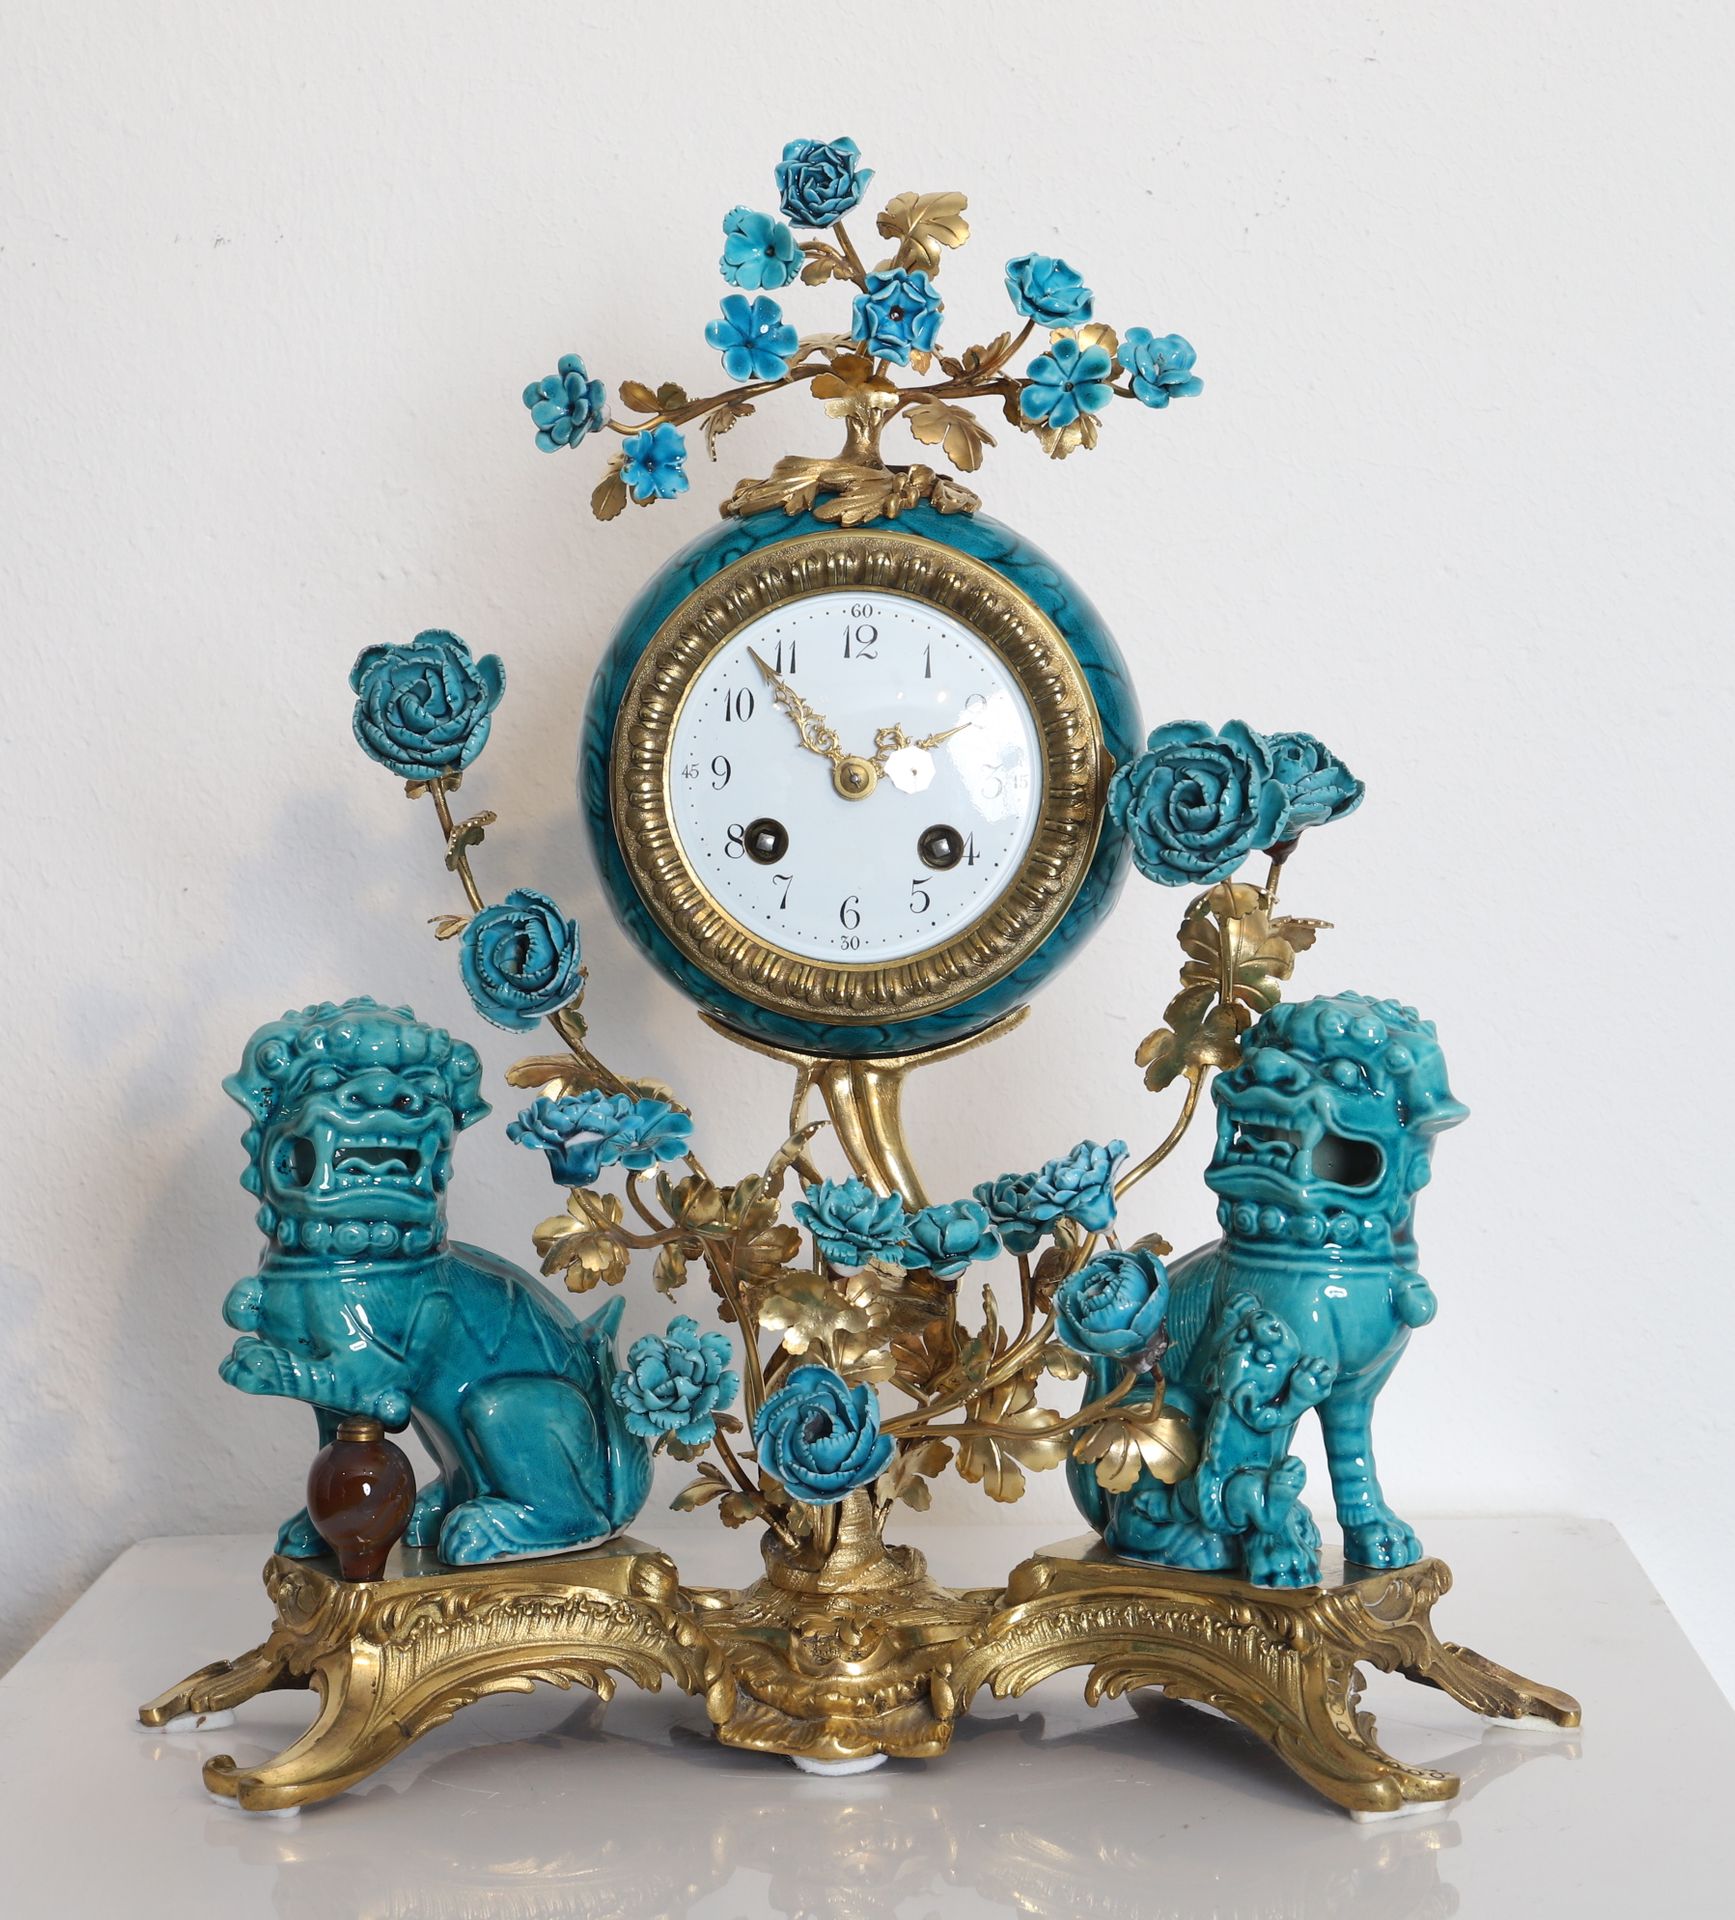 Null 罕见的路易十五罗盖尔钟
镀金青铜钟身，配以绿松石釉面的中国瓷器，饰有佛狗和花卉。 
白色珐琅表盘上用阿拉伯数字显示小时。 
由于使用和维护原因进行了修&hellip;